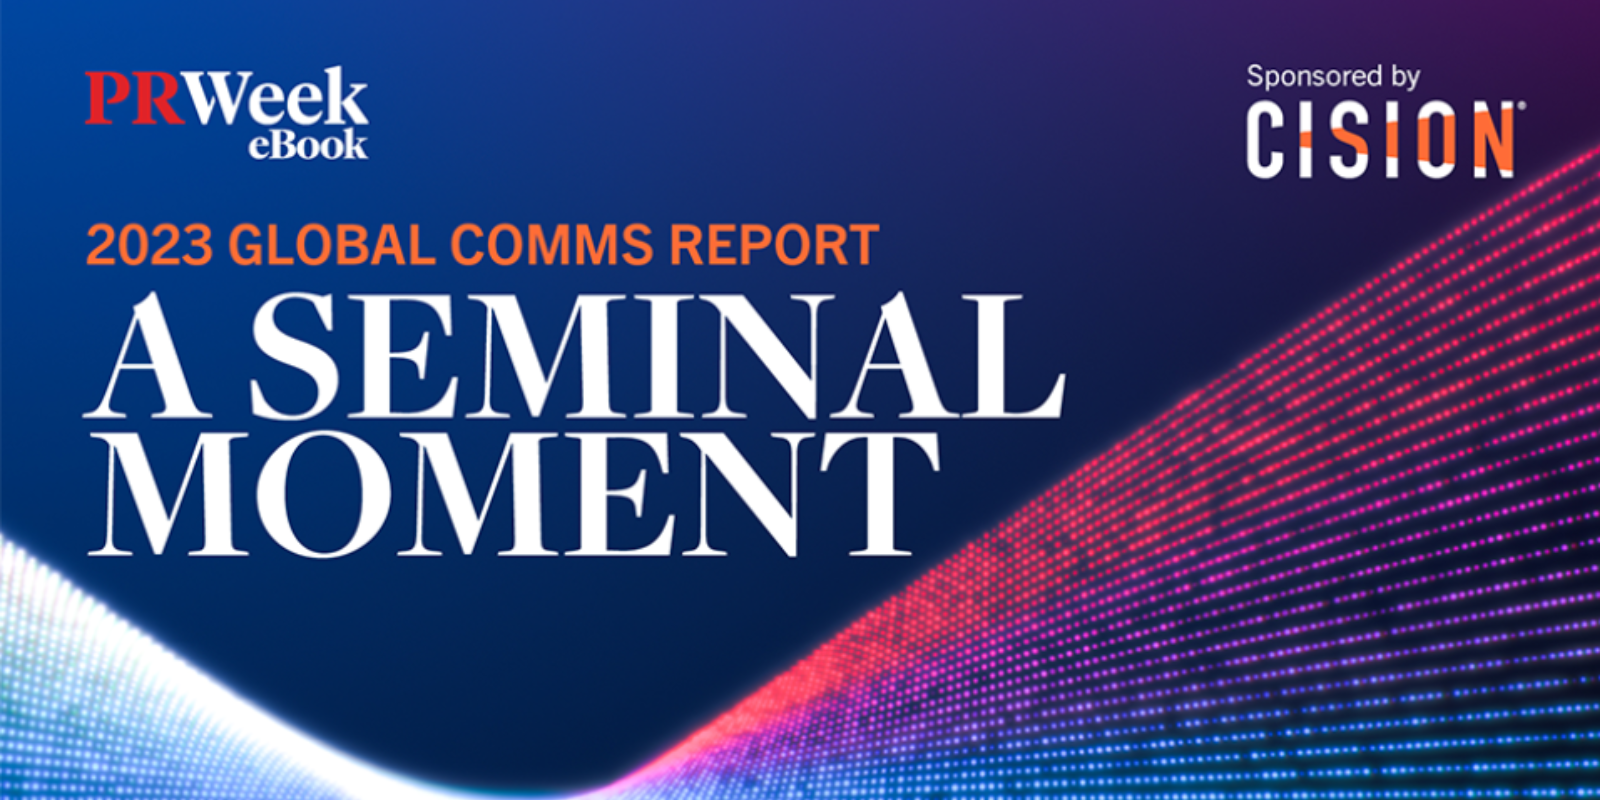 Global Comms Report 2023